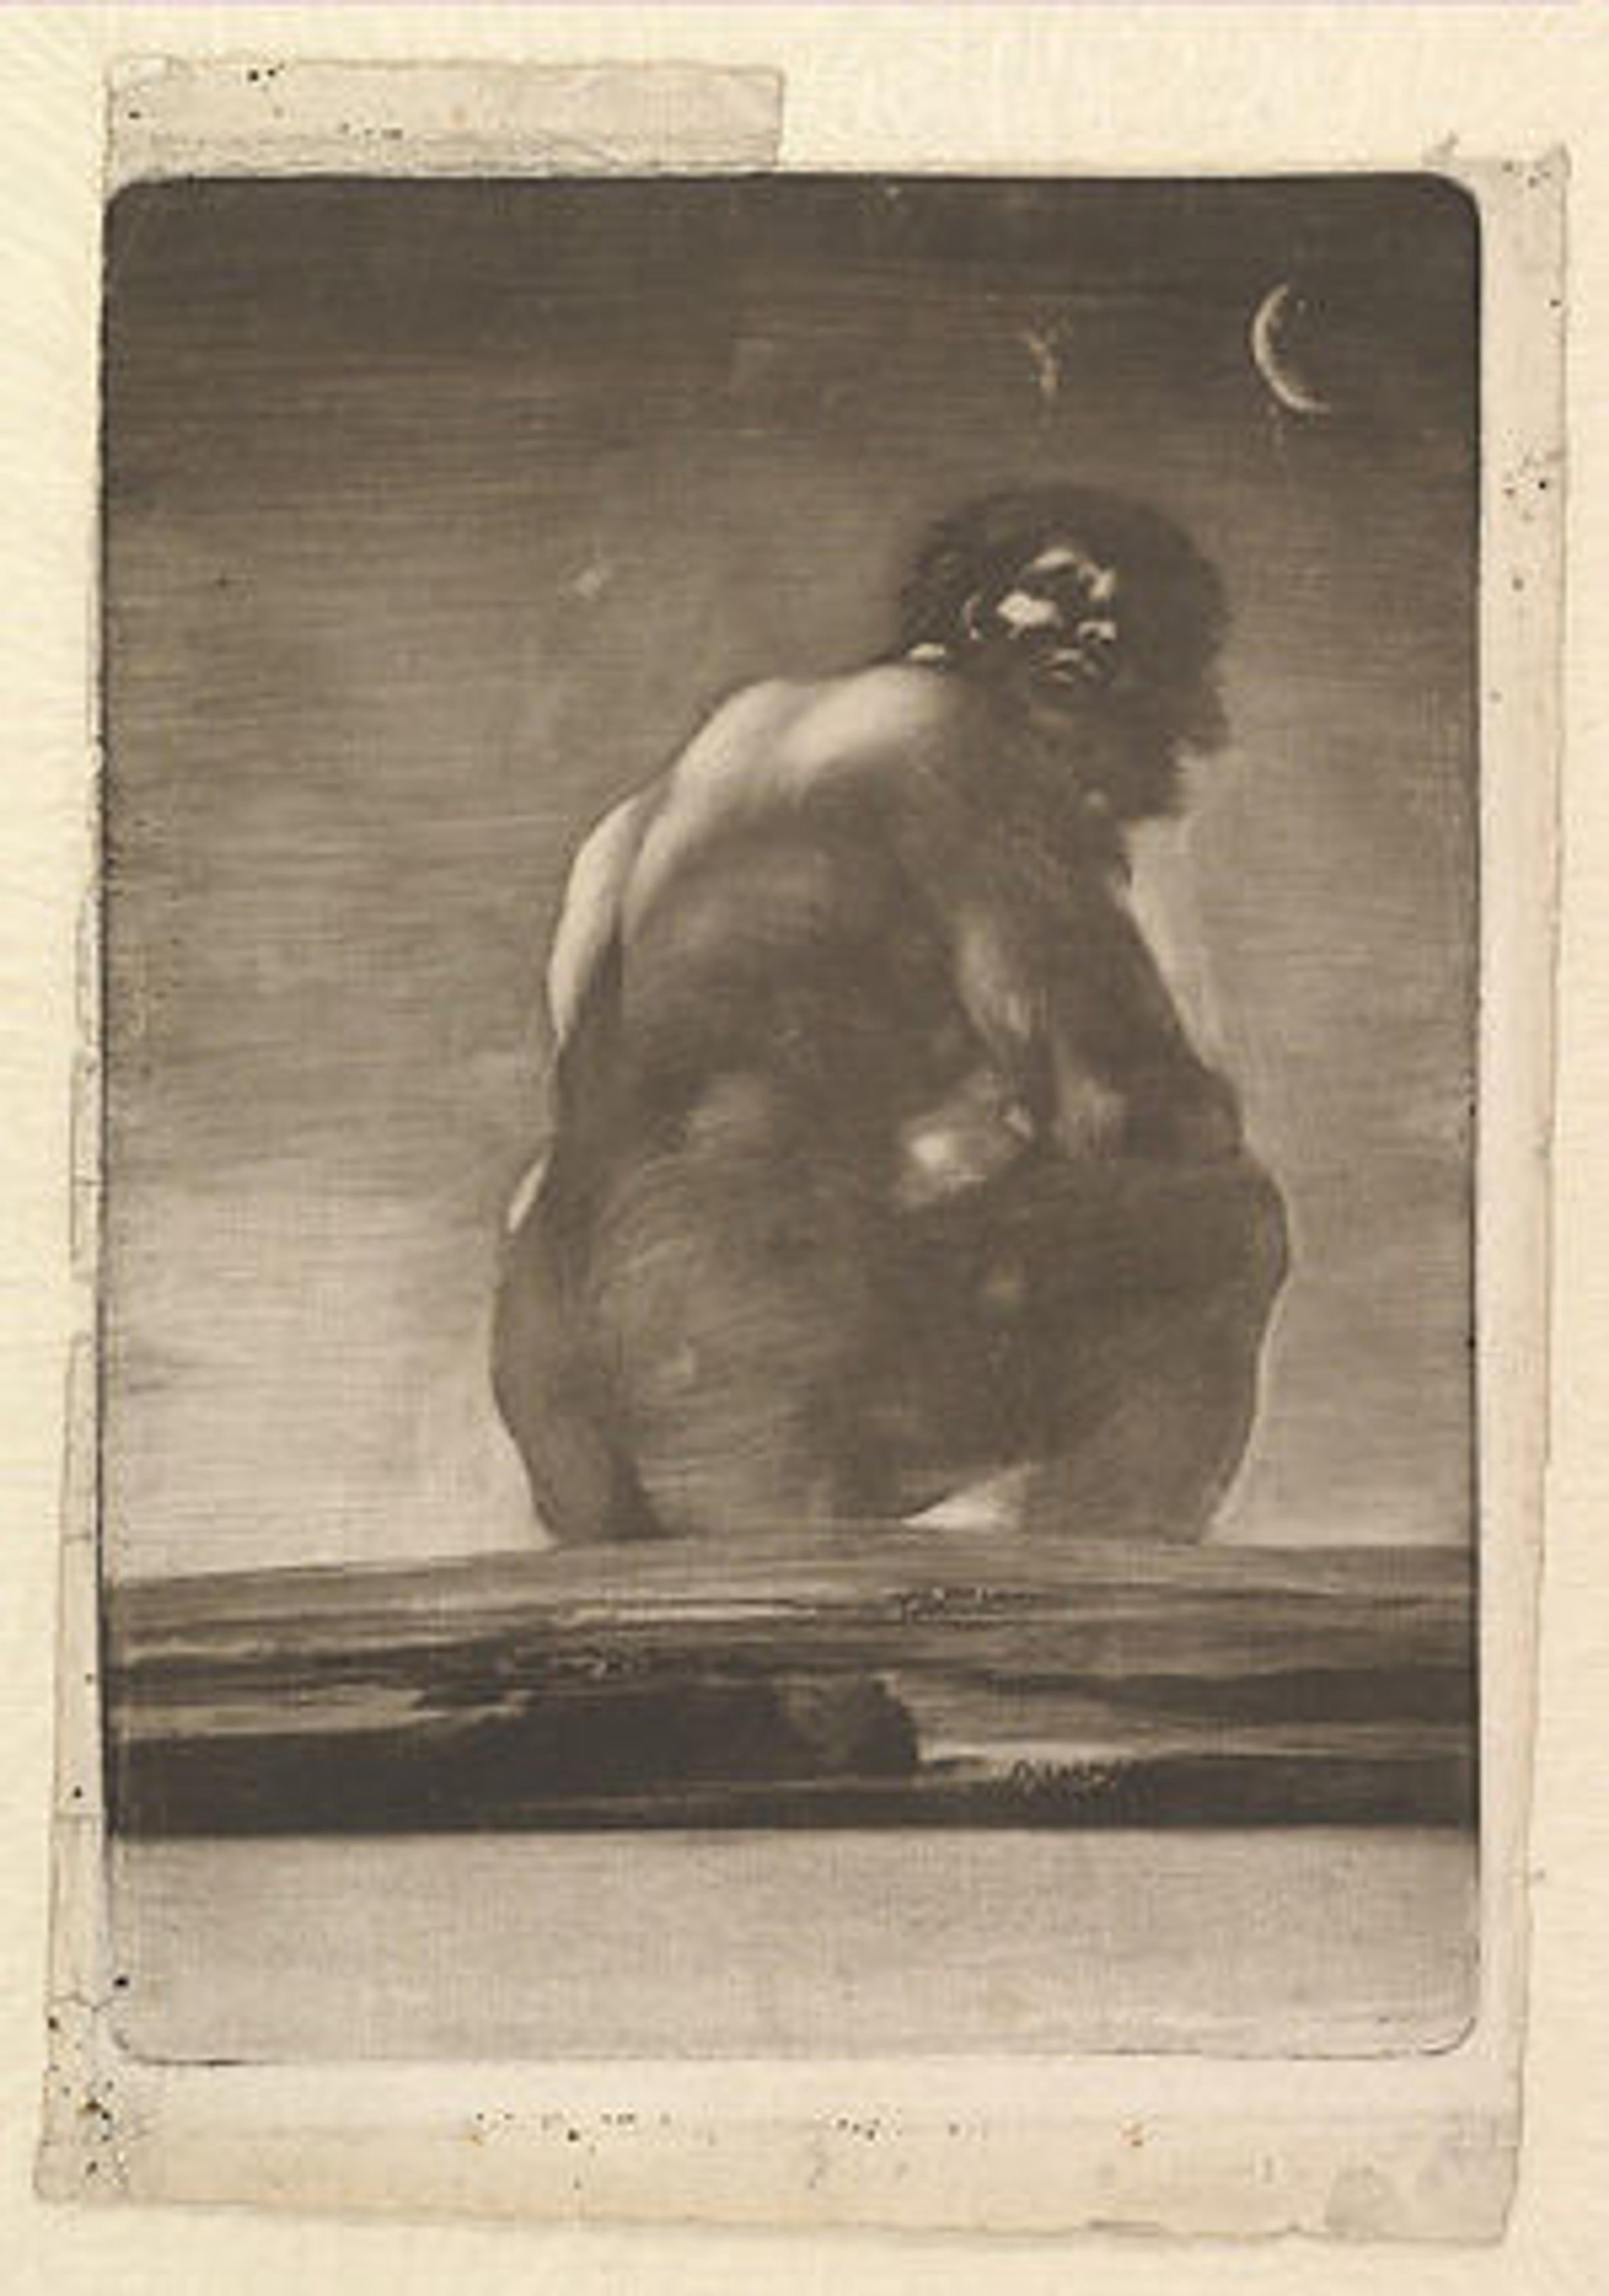 Francisco de Goya y Lucientes (Spanish, 1746-1828), Giant, 1818 